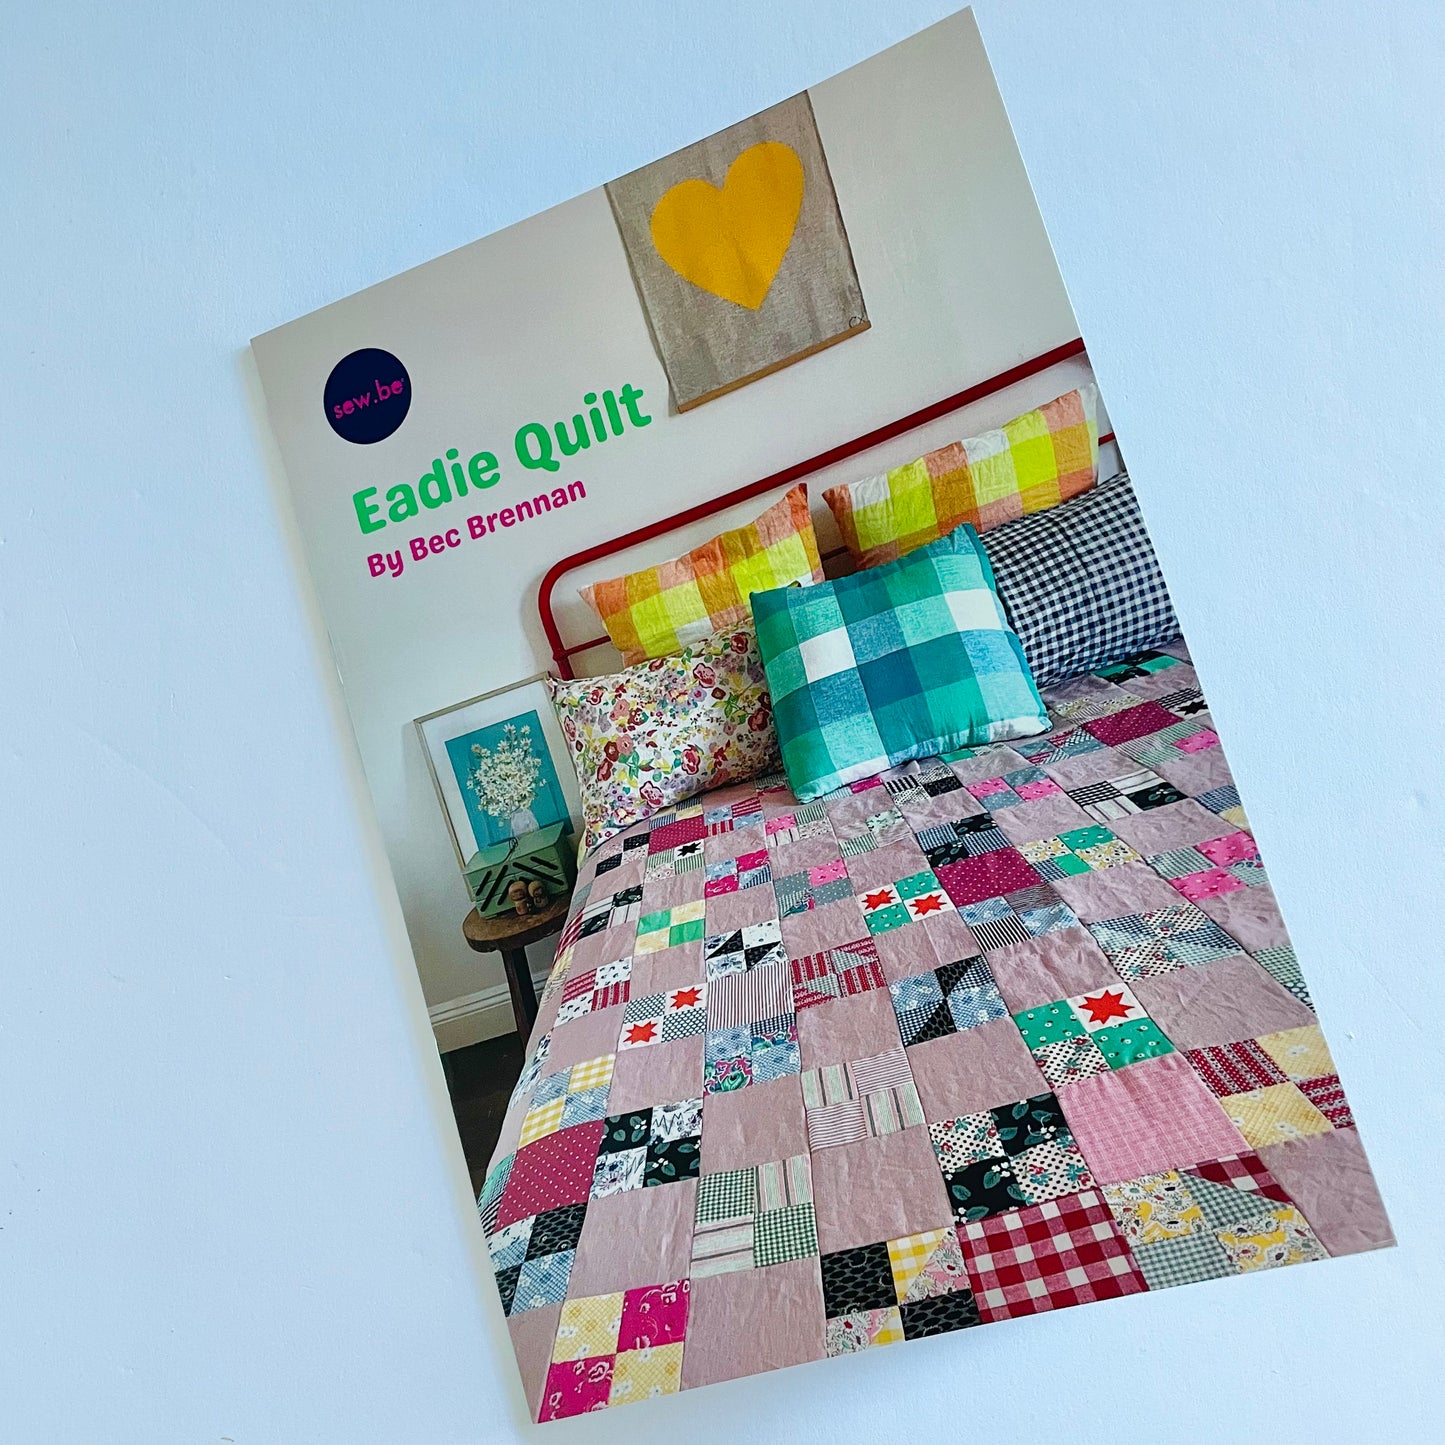 Eadie Quilt (A5 Hard Copy Booklet)